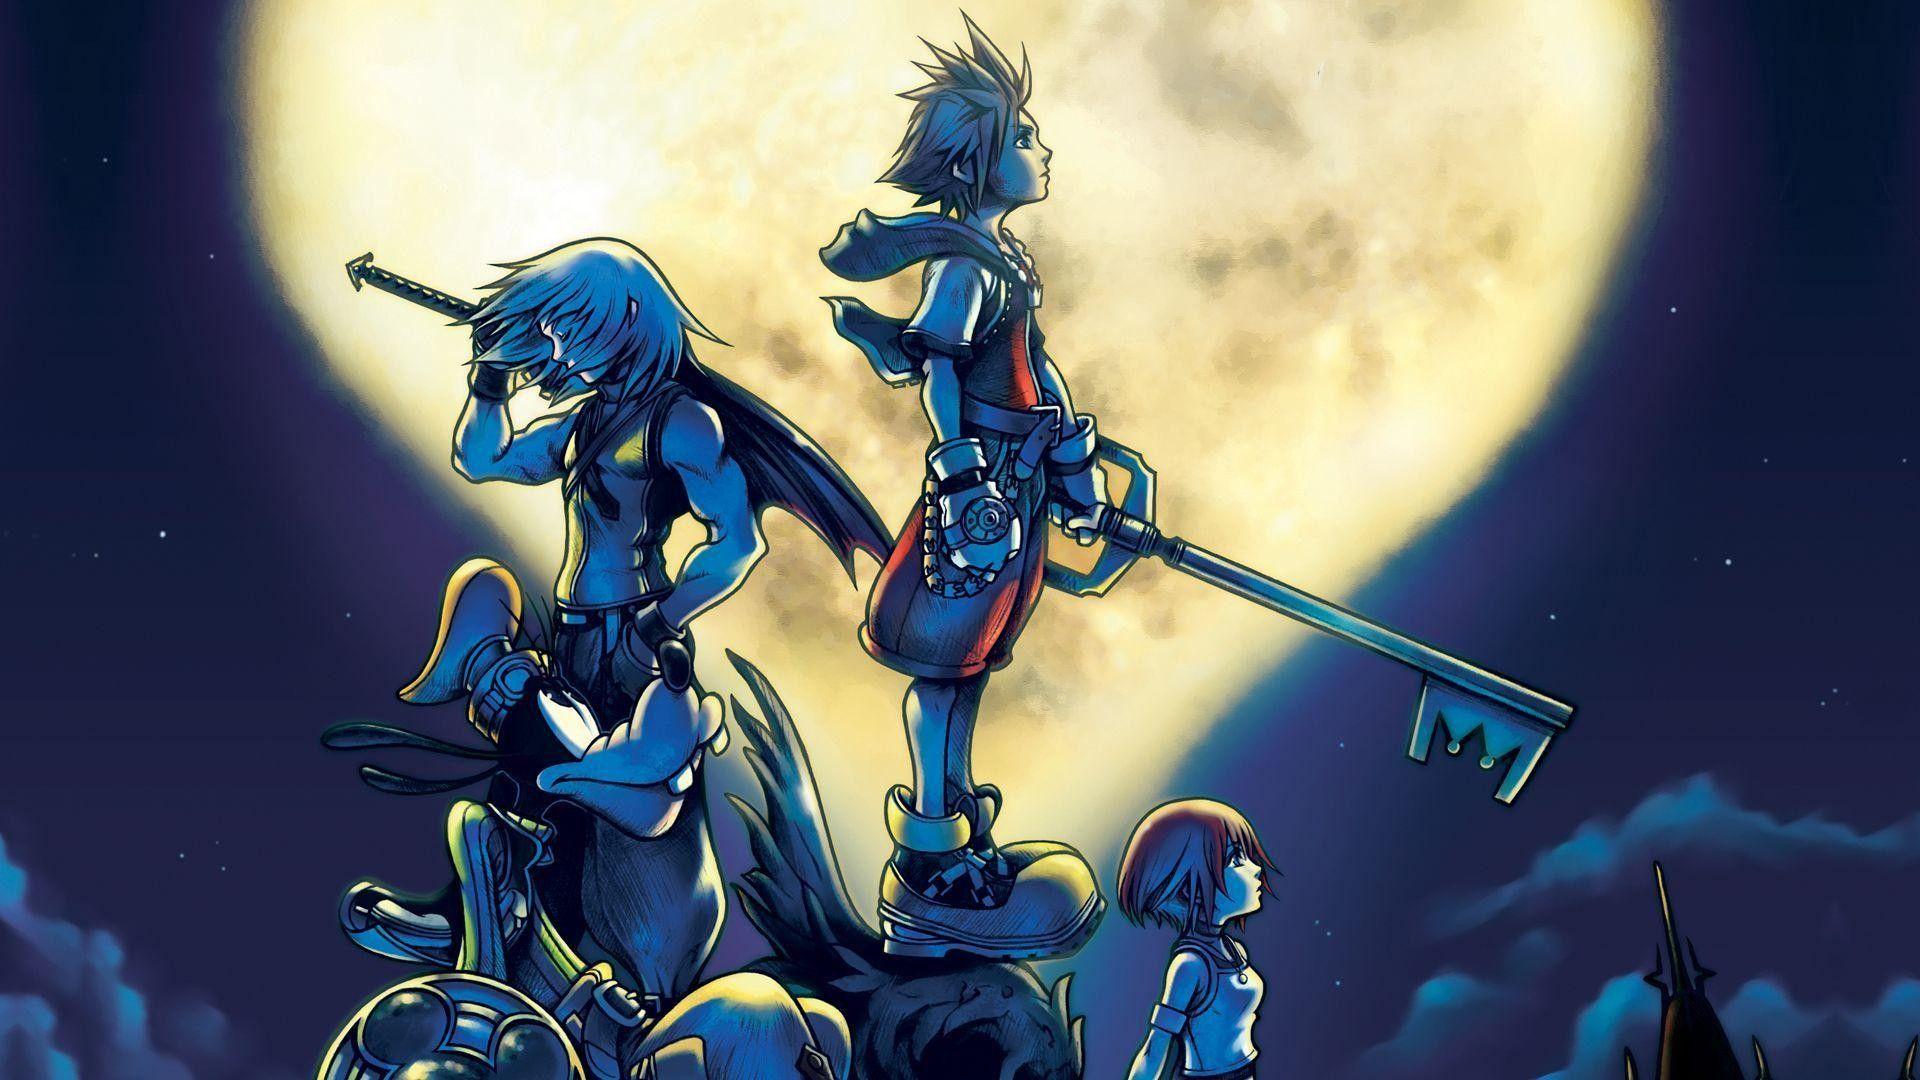 Kingdom Hearts Wallpapers HD Free download  PixelsTalkNet